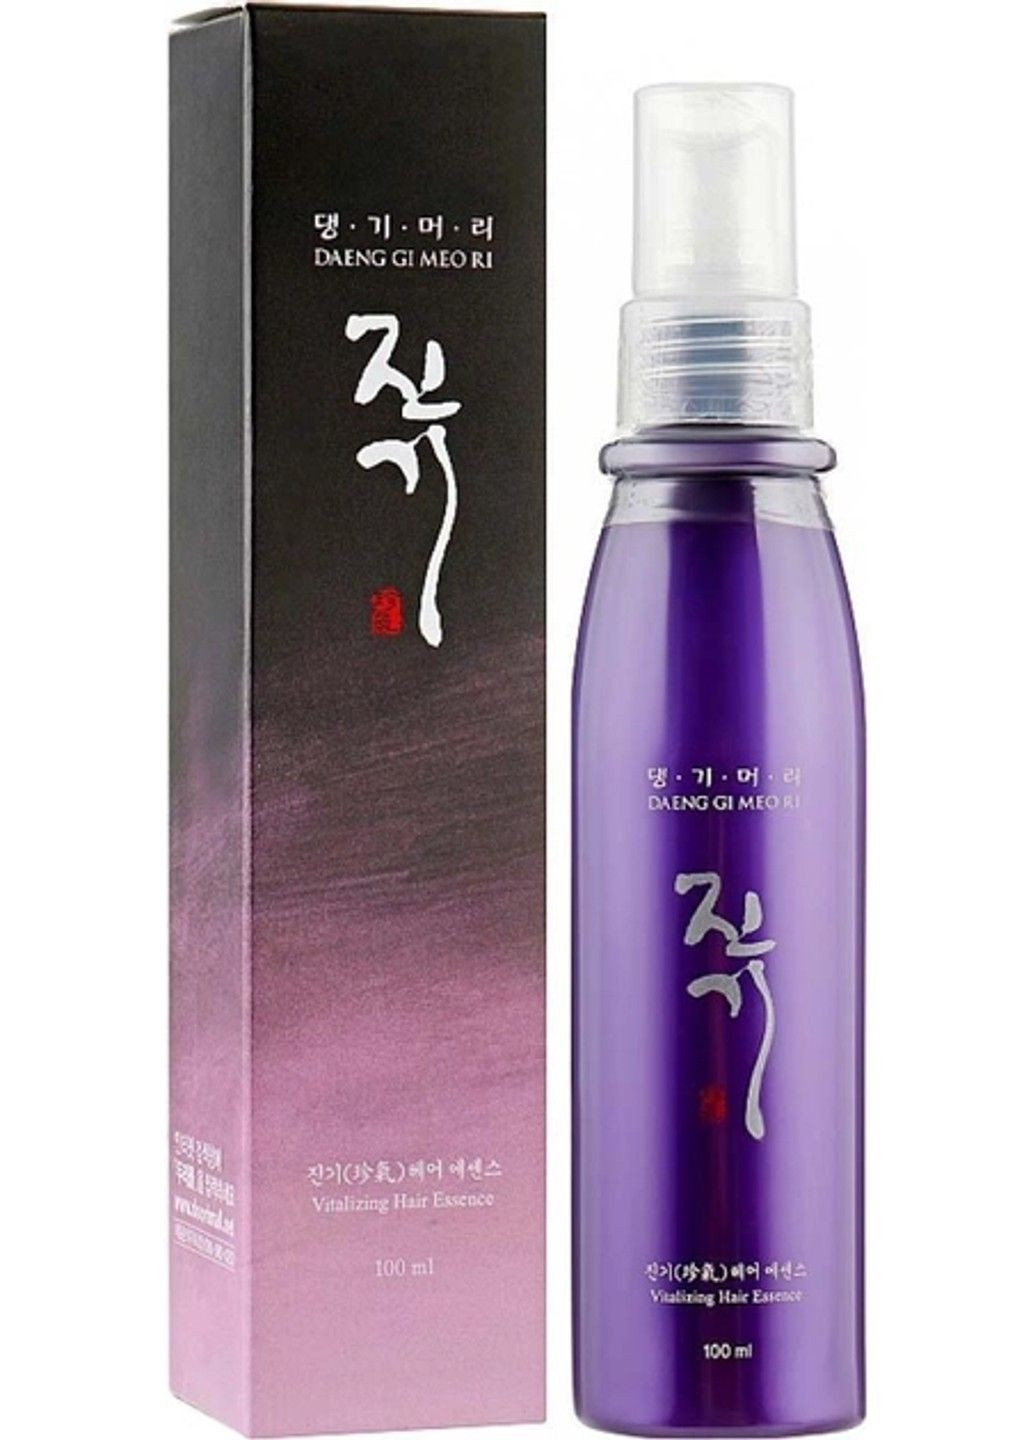 Увлажняющая эссенция-спрей для волос Vitalizing Hair Essence - 100 мл Daeng Gi Meo Ri (285813561)